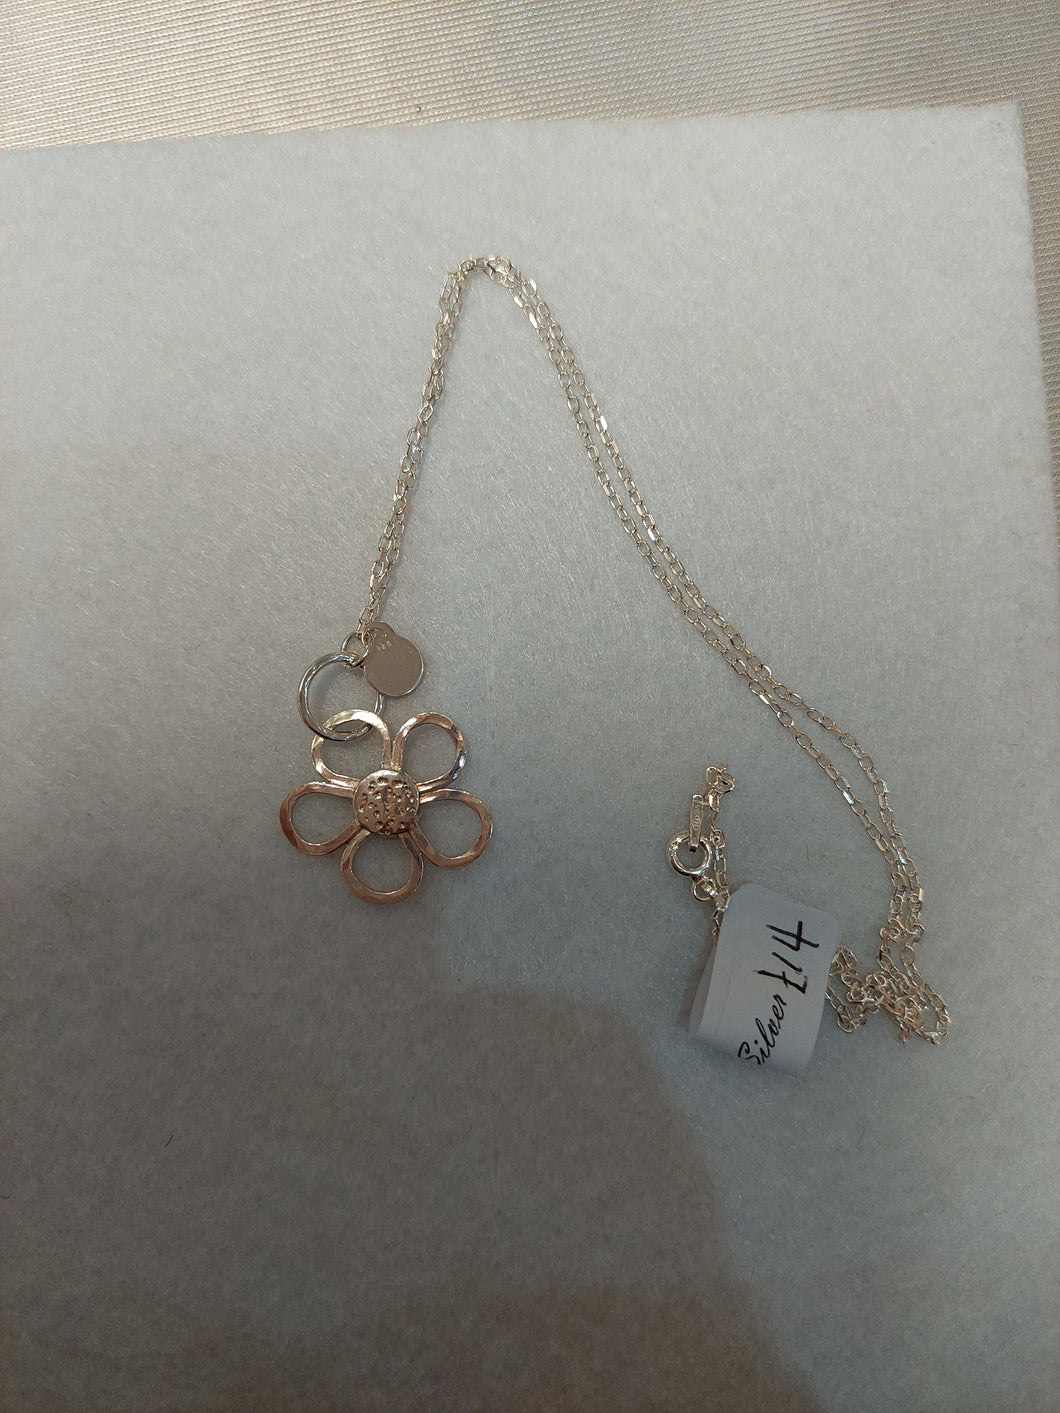 Stirling Silver 'Flower' Necklace